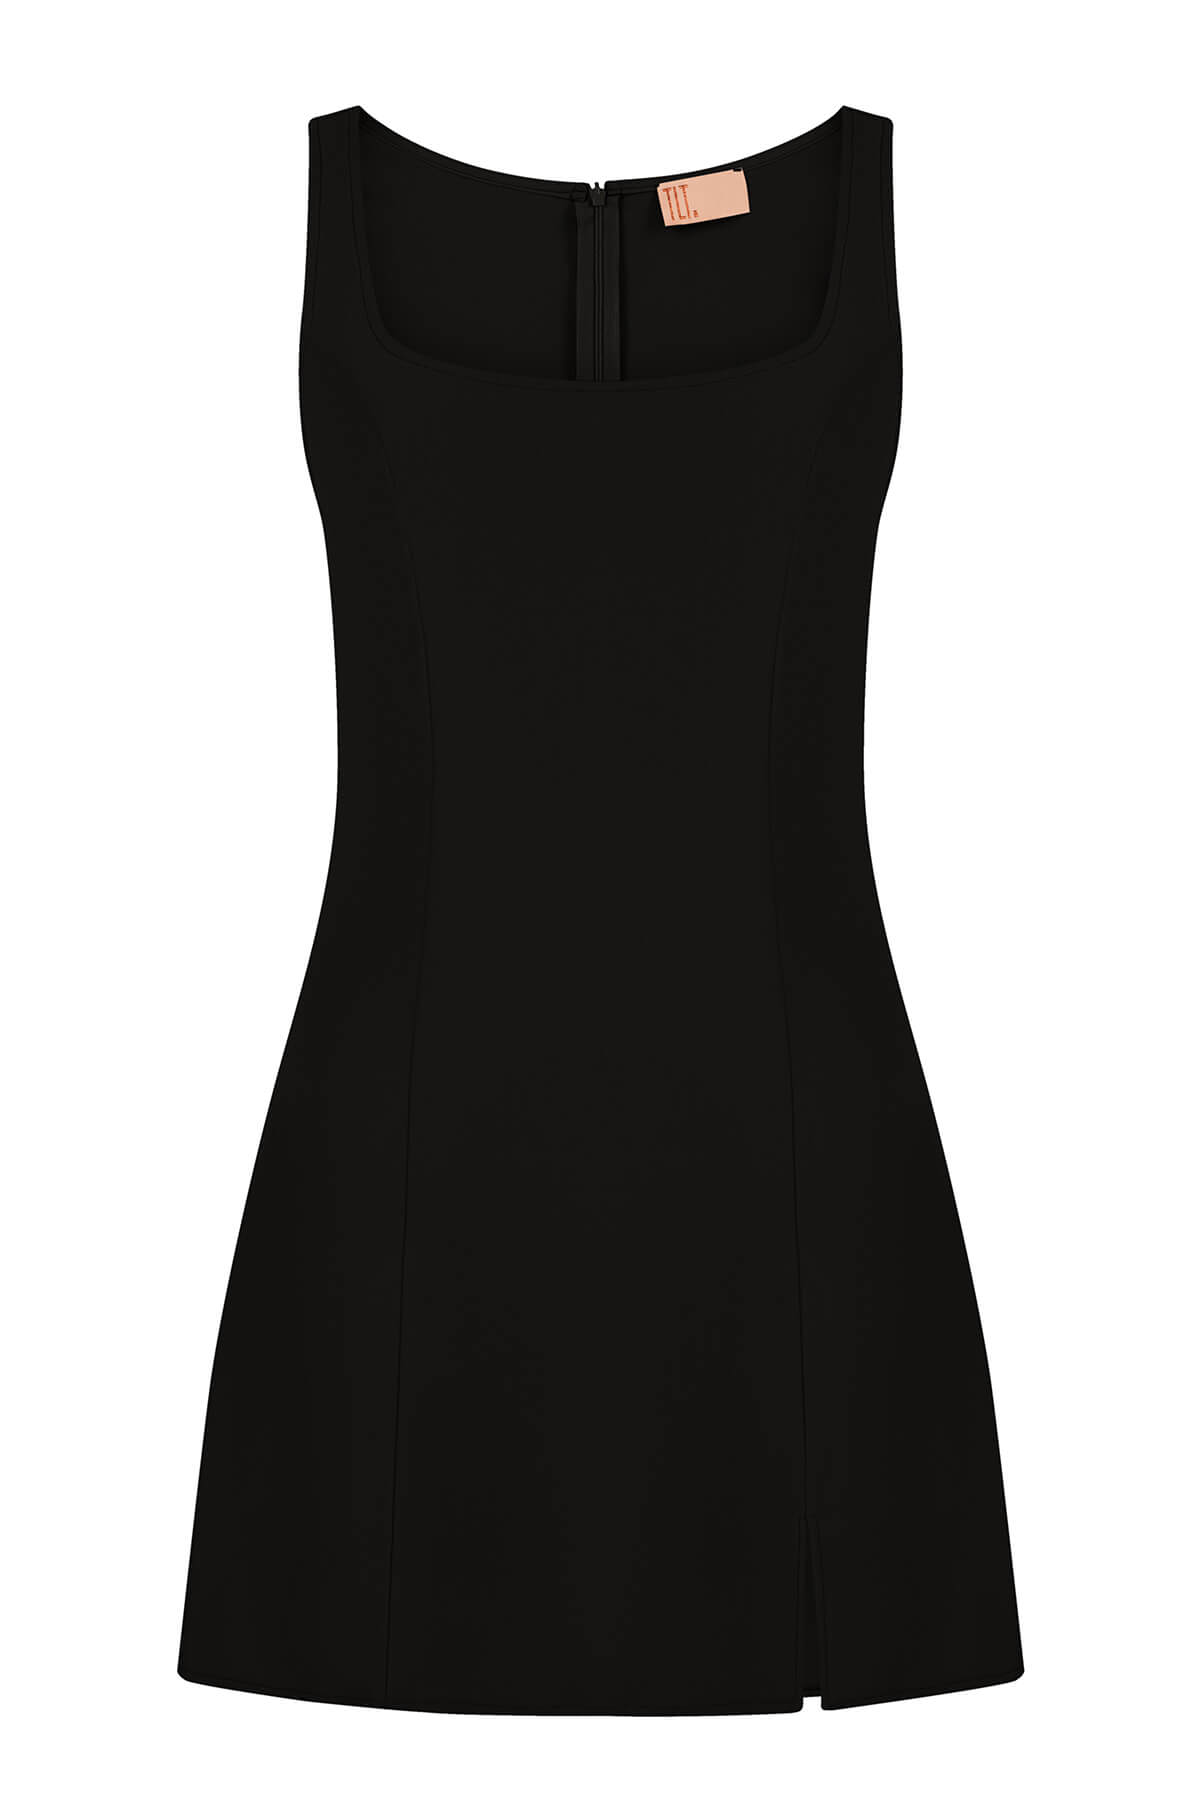 BARBIE Crepe Black Mini Athlete Dress